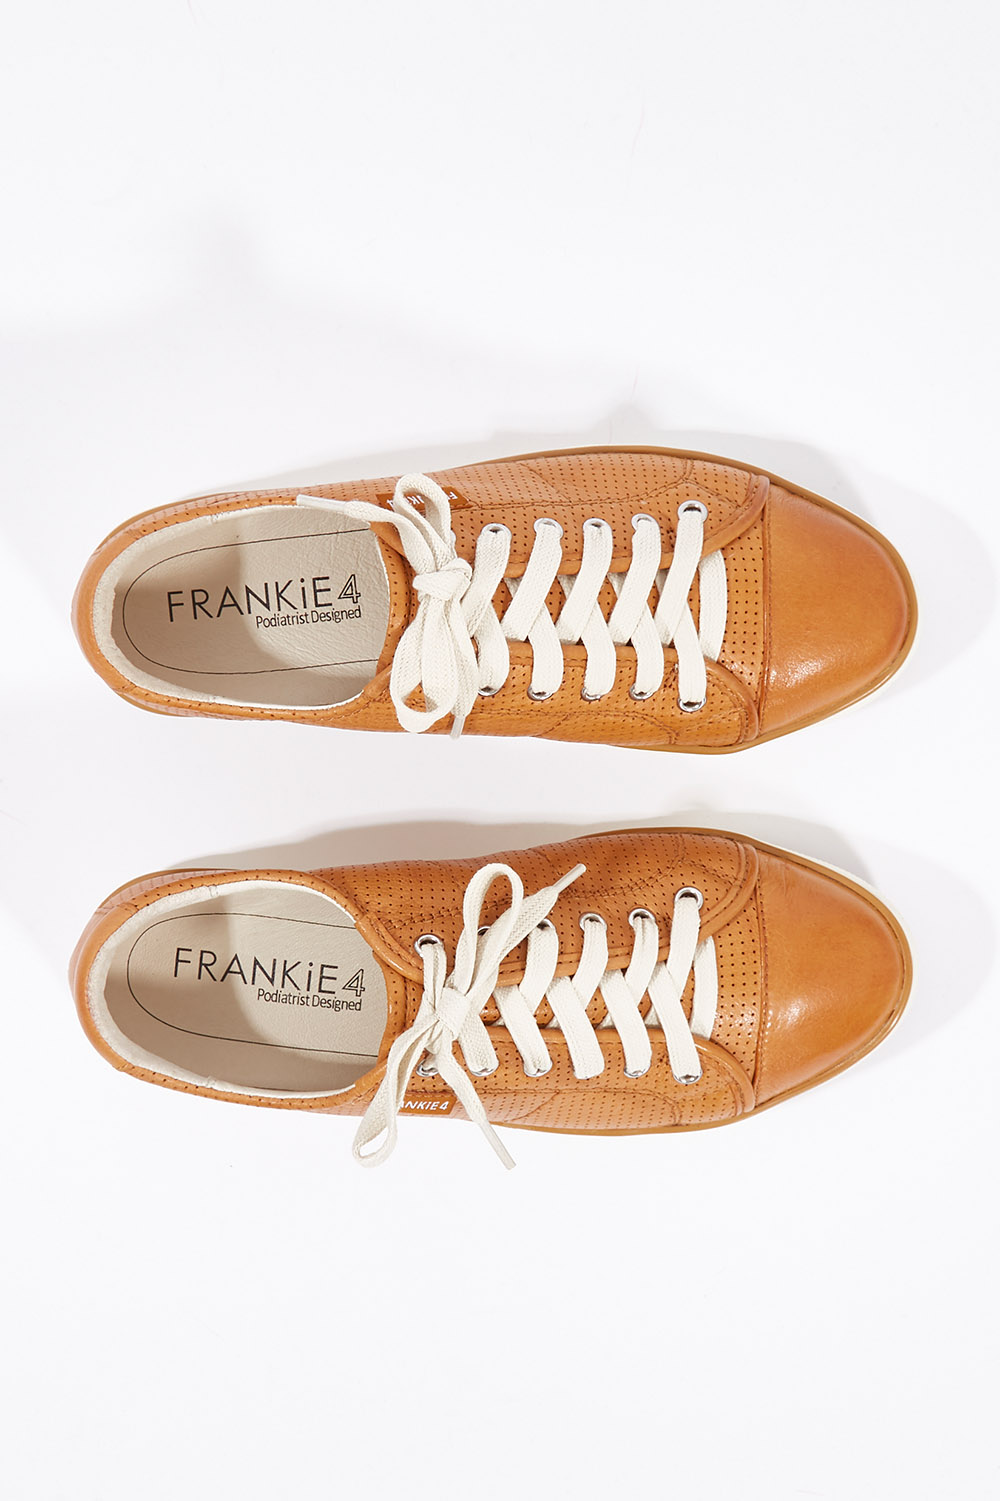 frankie4 nurse shoes